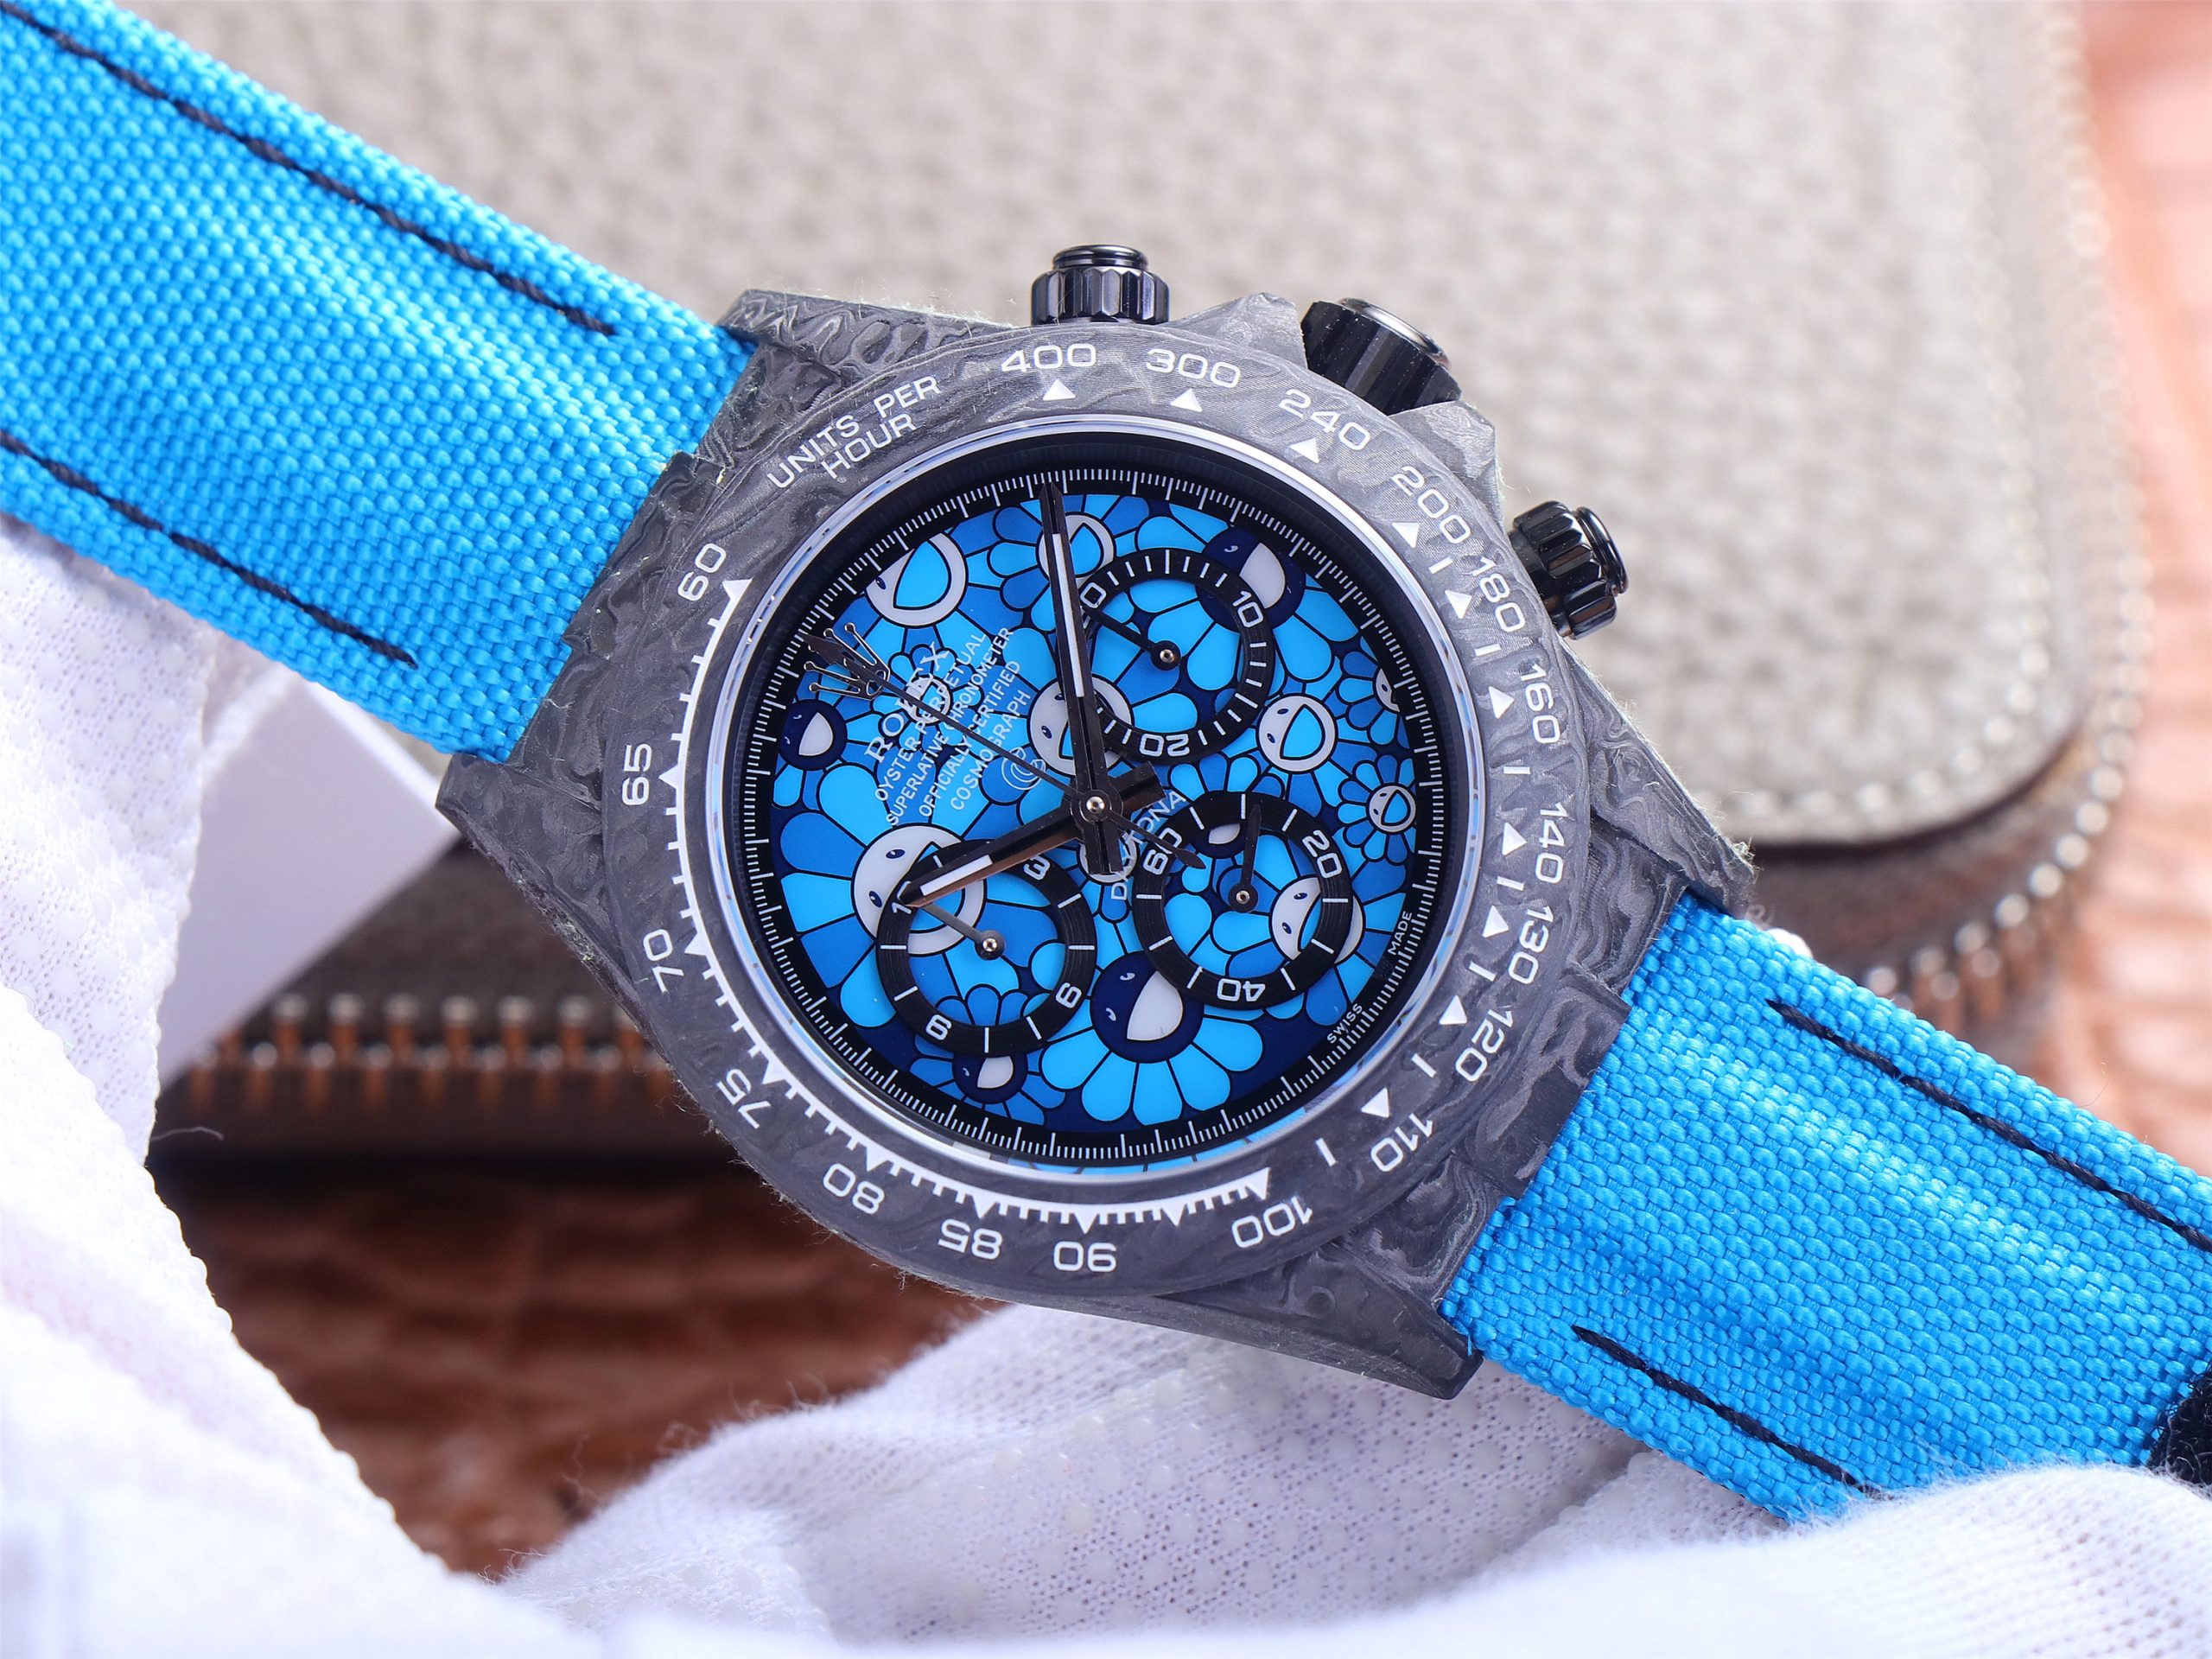 2023021205282417 scaled - 精仿勞力士迪通拿的價格一般在多少錢 JH廠手錶勞力士迪通拿碳纖維定制版￥4580